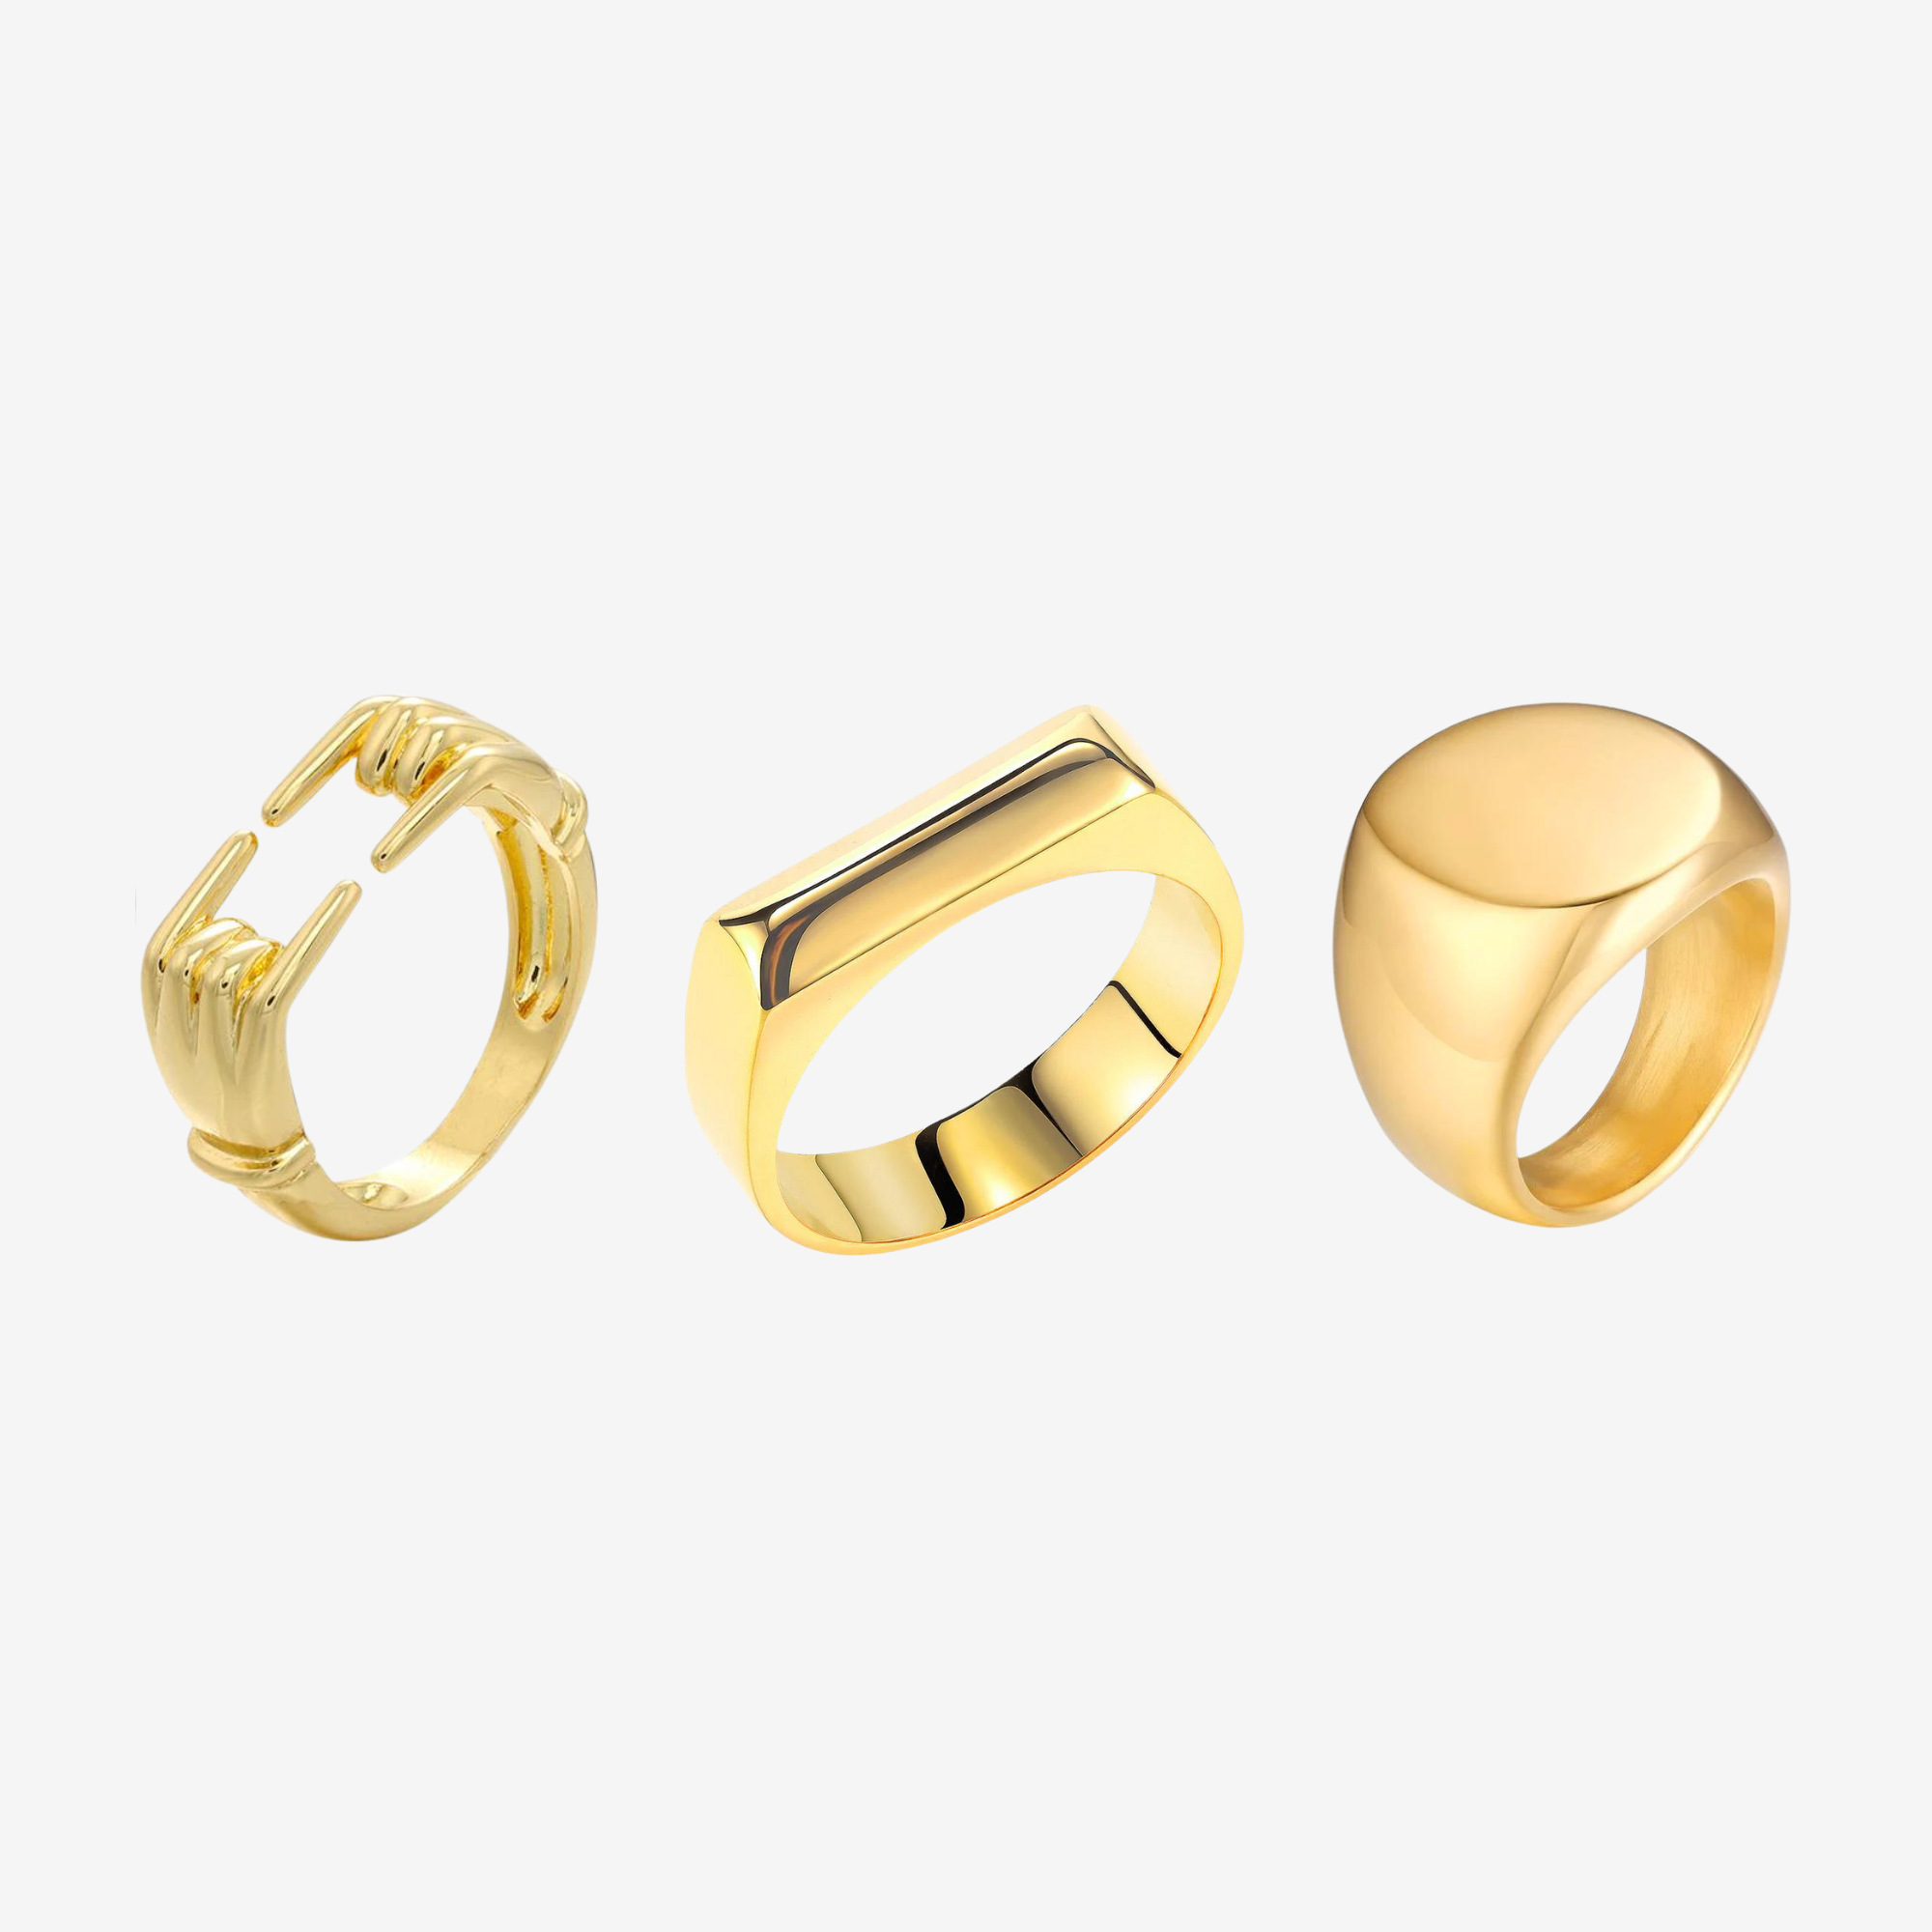 Hillenic Plain Gold Rings Superbundle, main image, iced hip hop jewelry